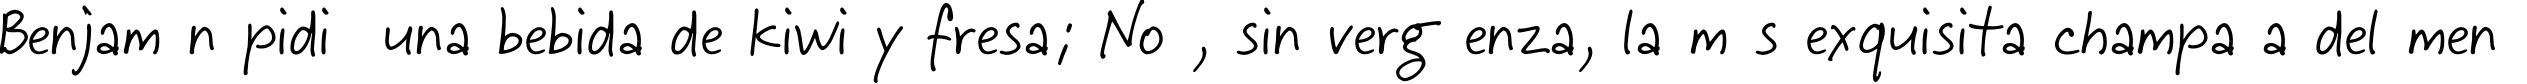 Пример написания шрифтом Jeff Script текста на испанском